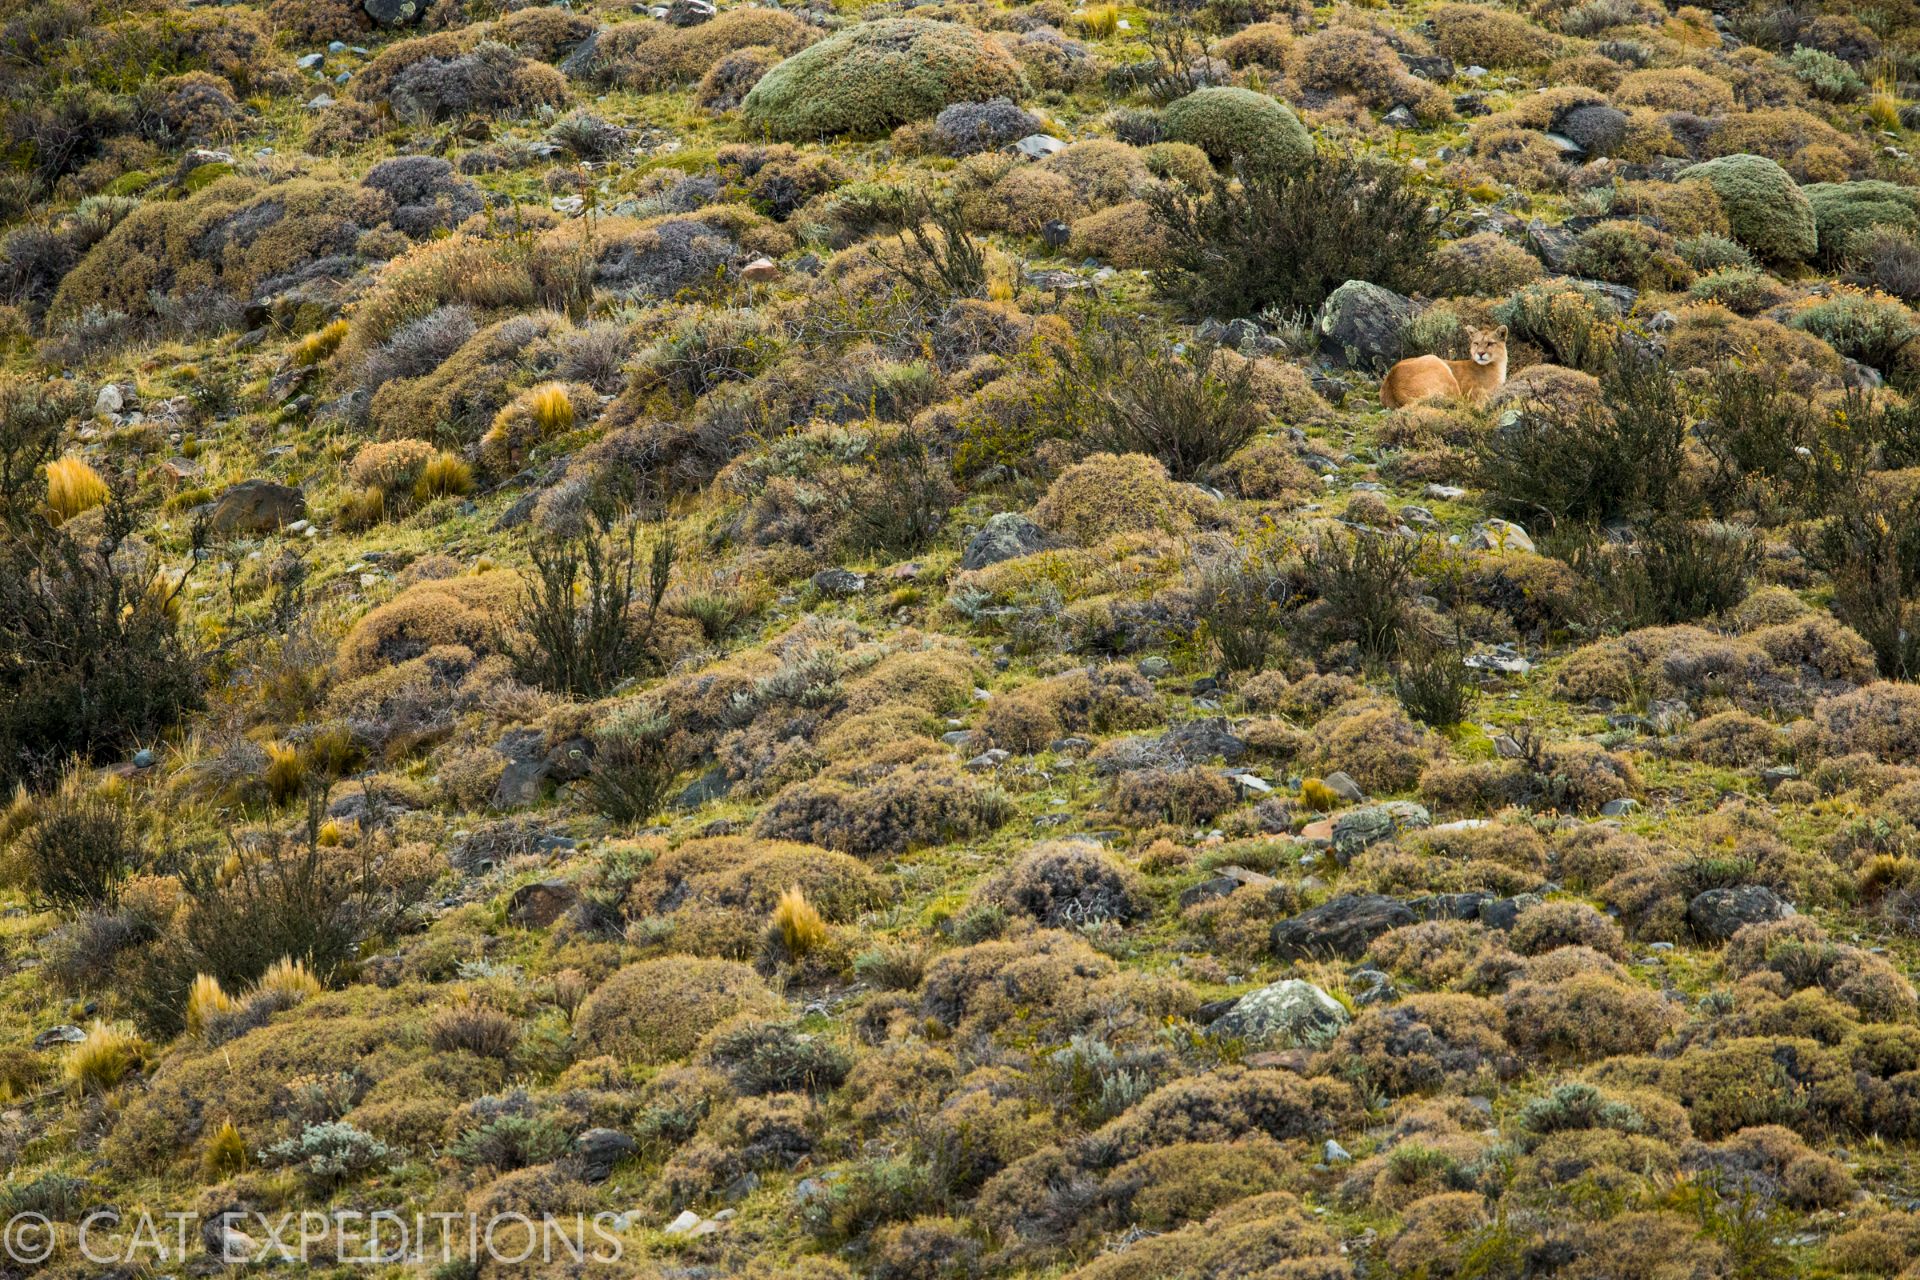 Puma in Patagonian shrubland